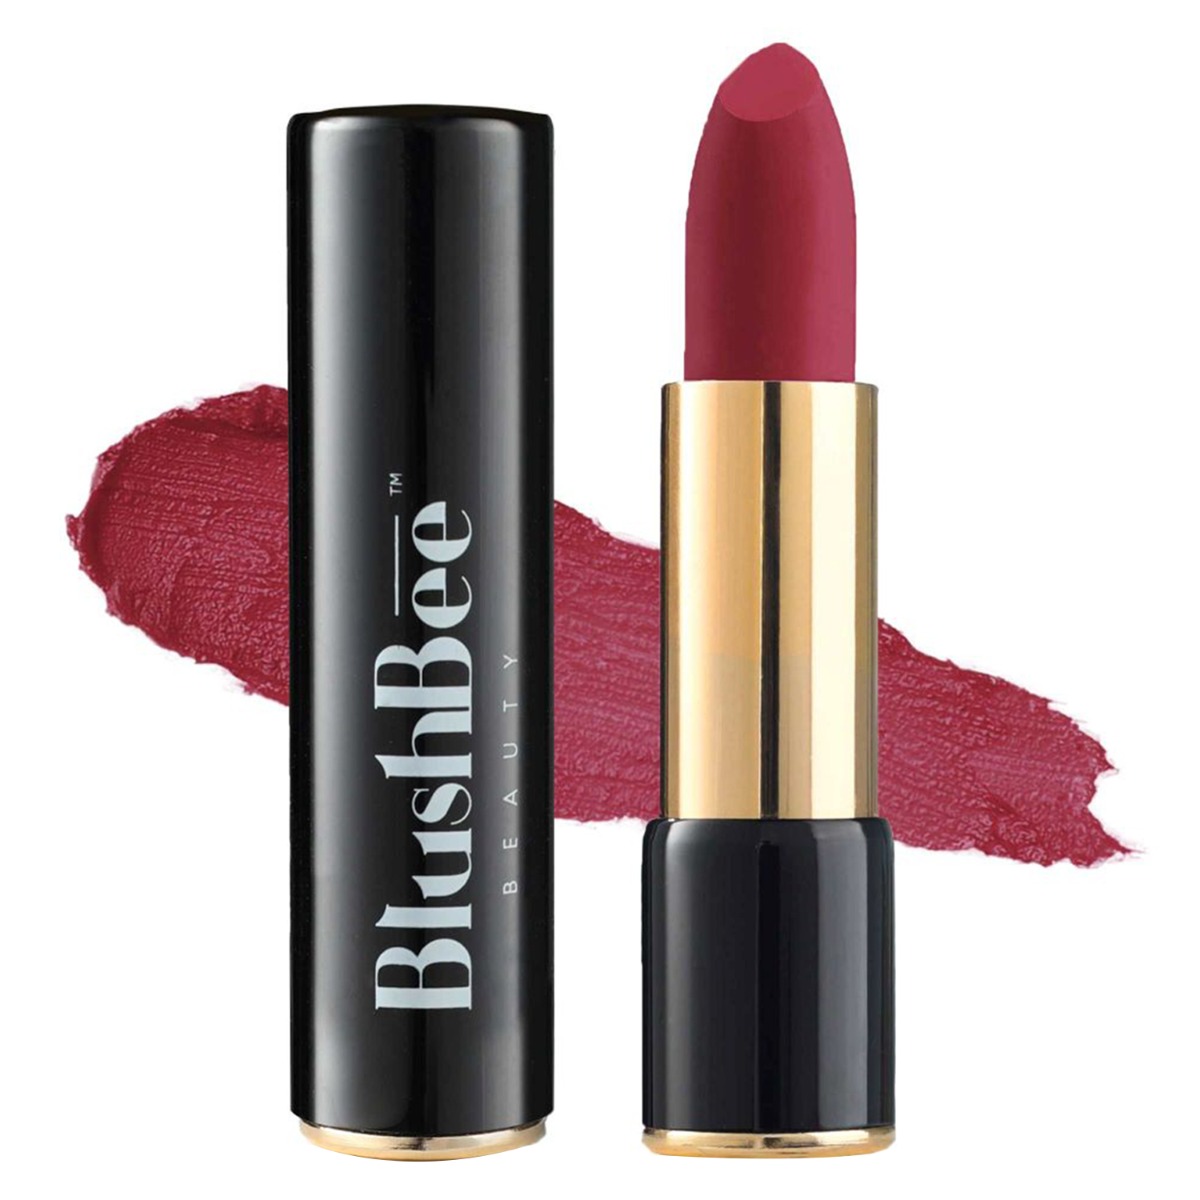 BlushBee Organic Beauty Lip Nourishing Organic Vegan Lipstick, 4.2gm-Deep Hue Maroon